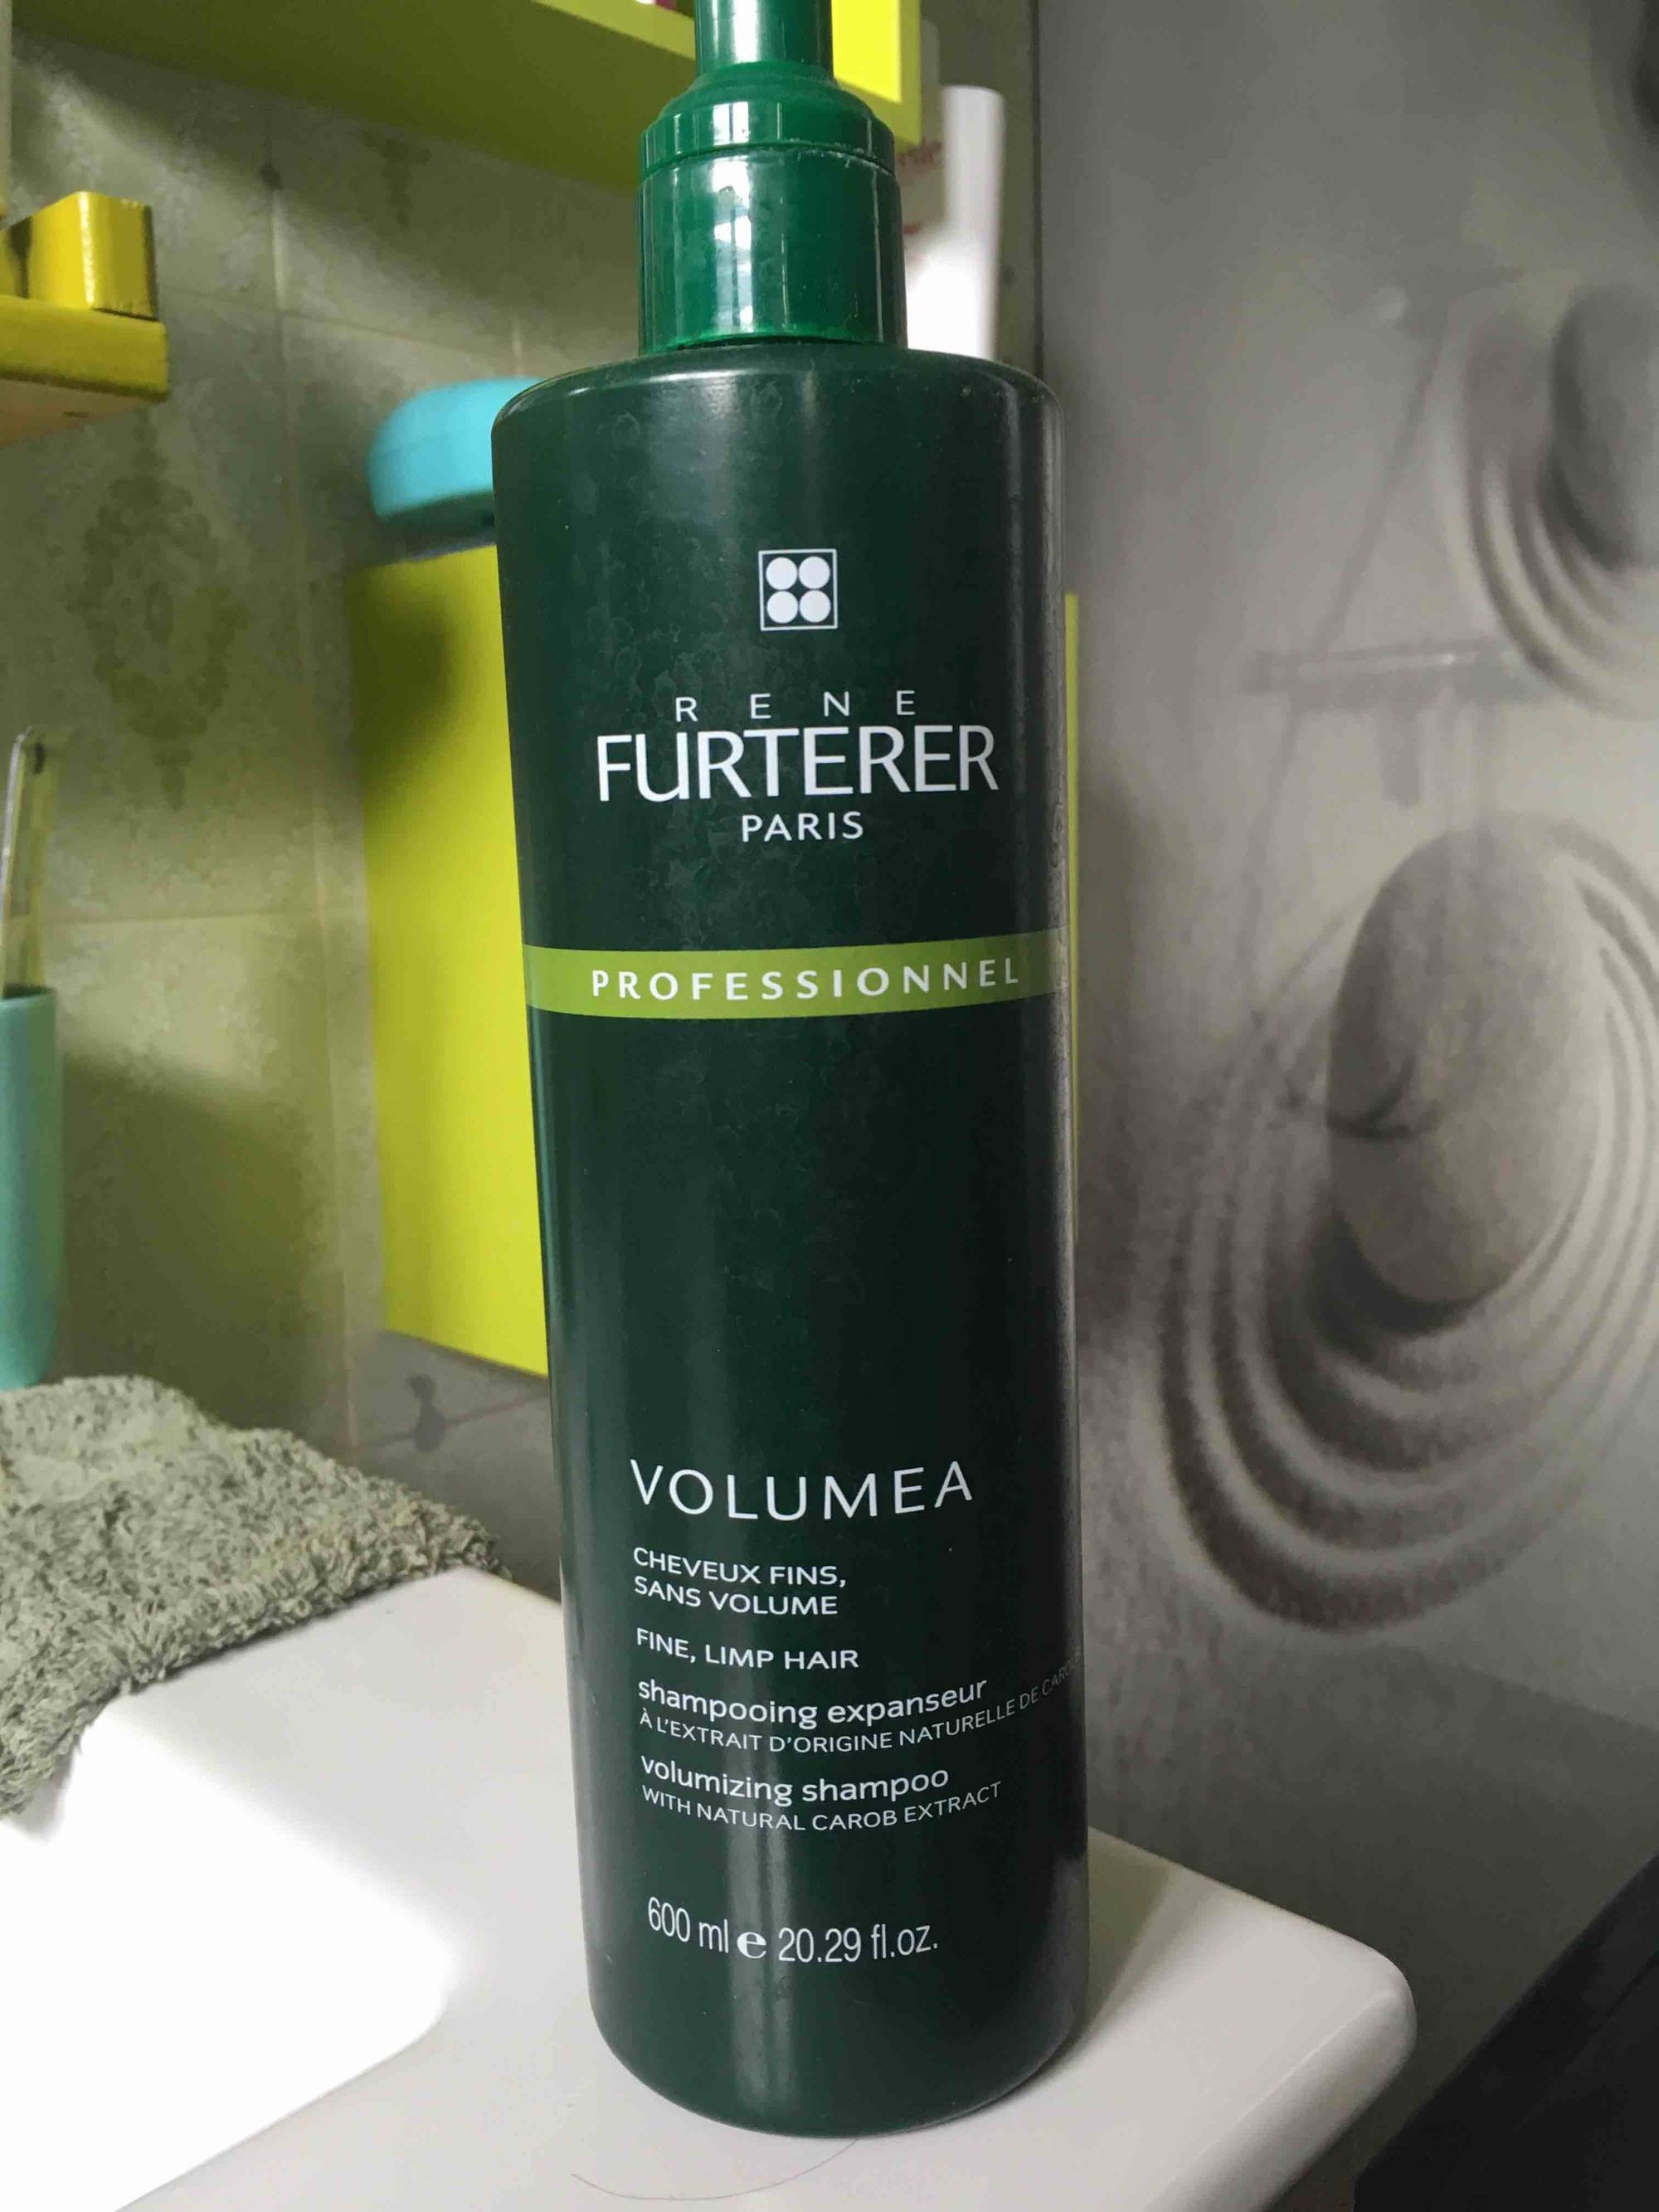 RENÉ FURTERER - Volumea - Shampooing expanseur